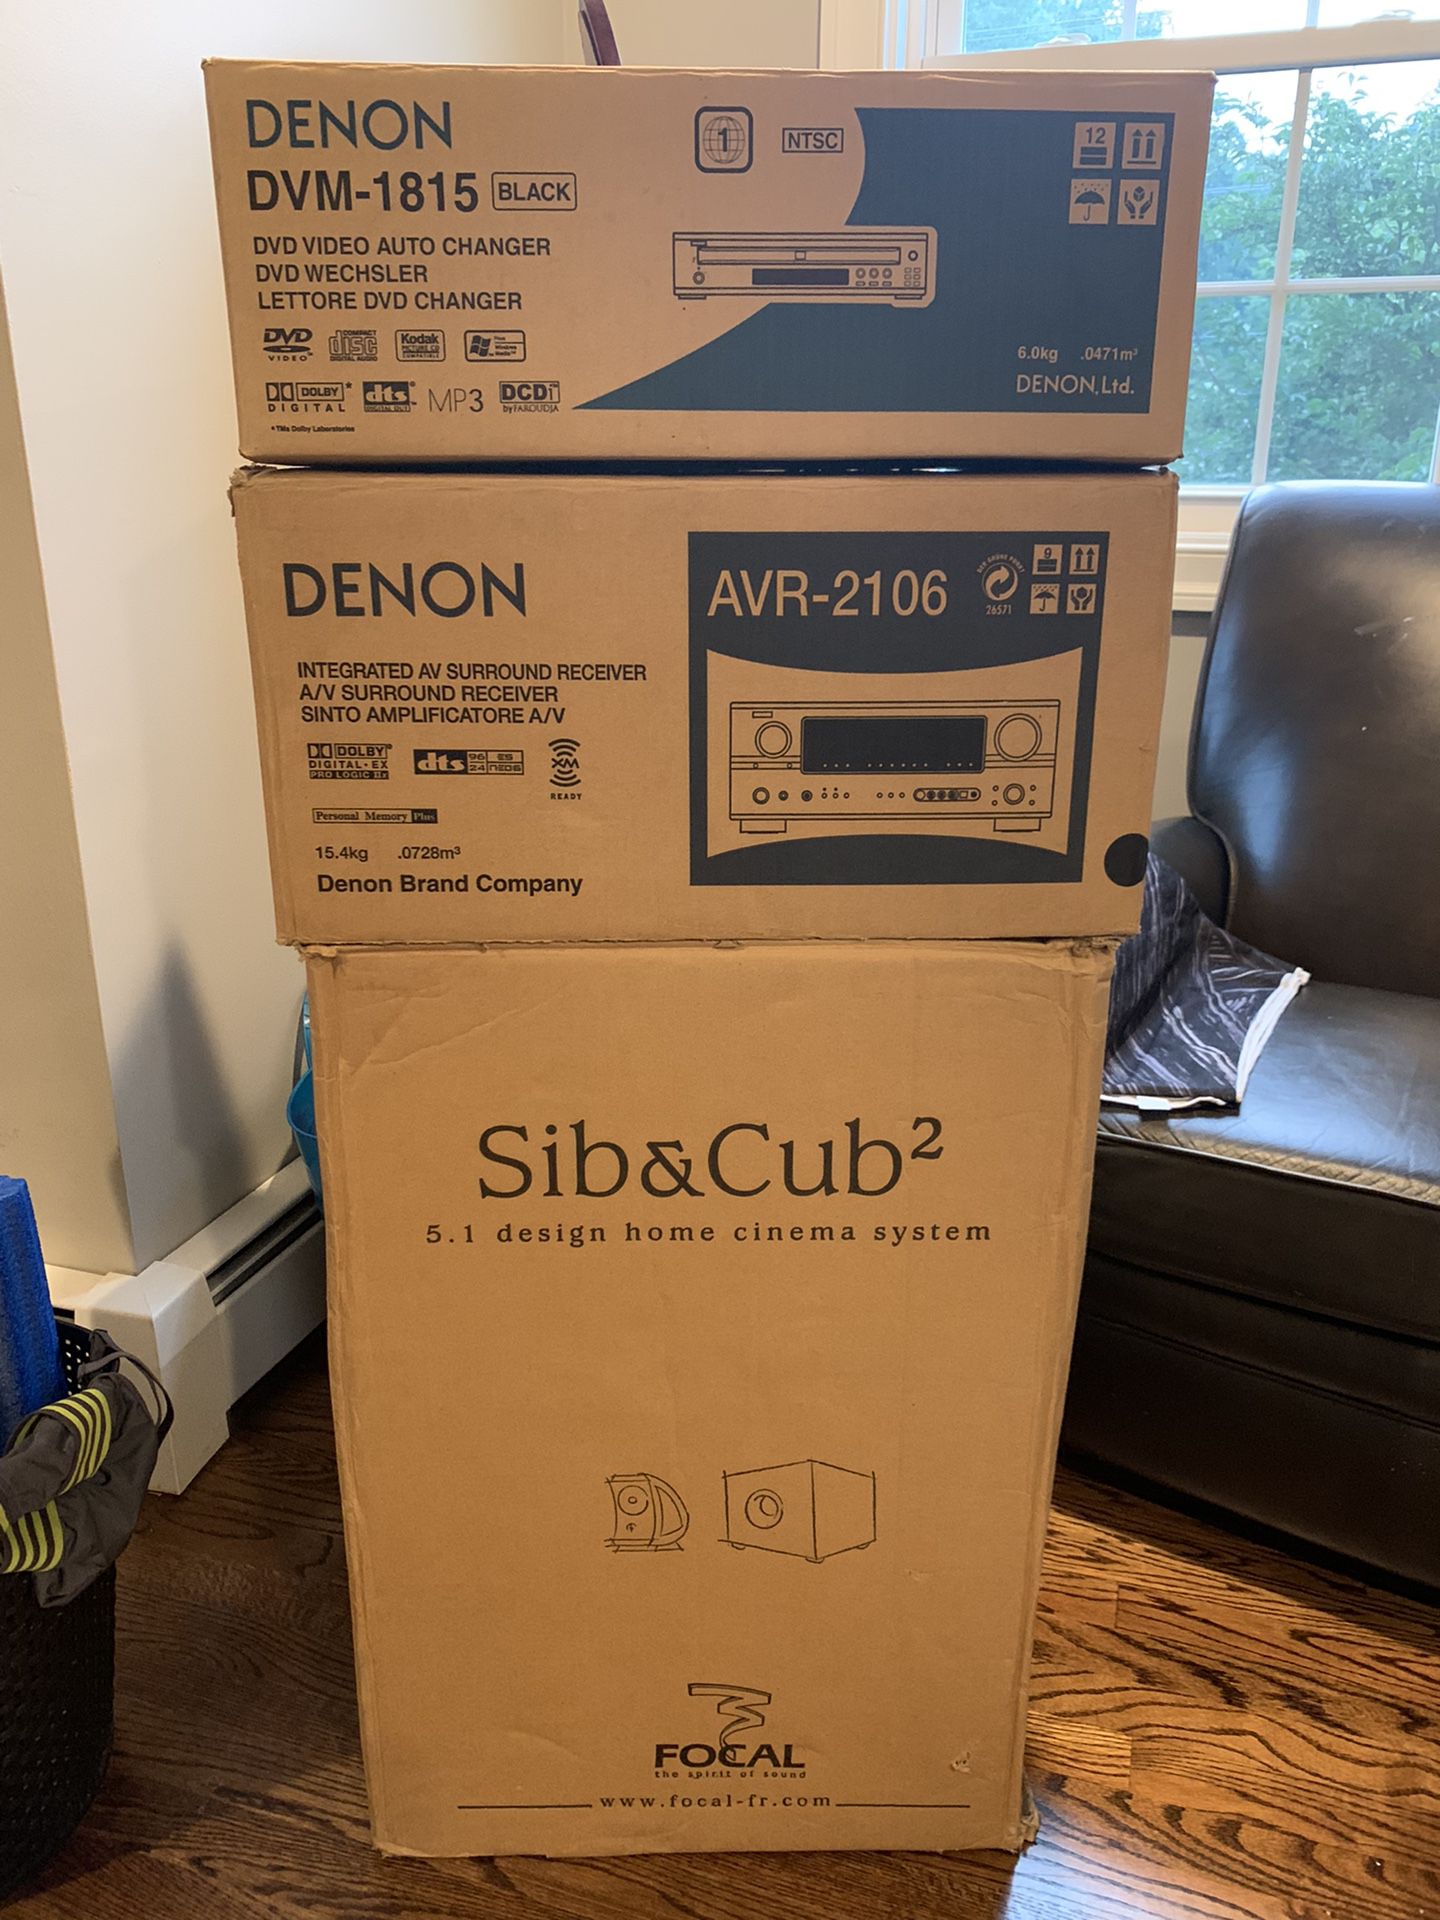 Sib&Cub2 Surround/Denon Receiver And Cd/Dvd Player